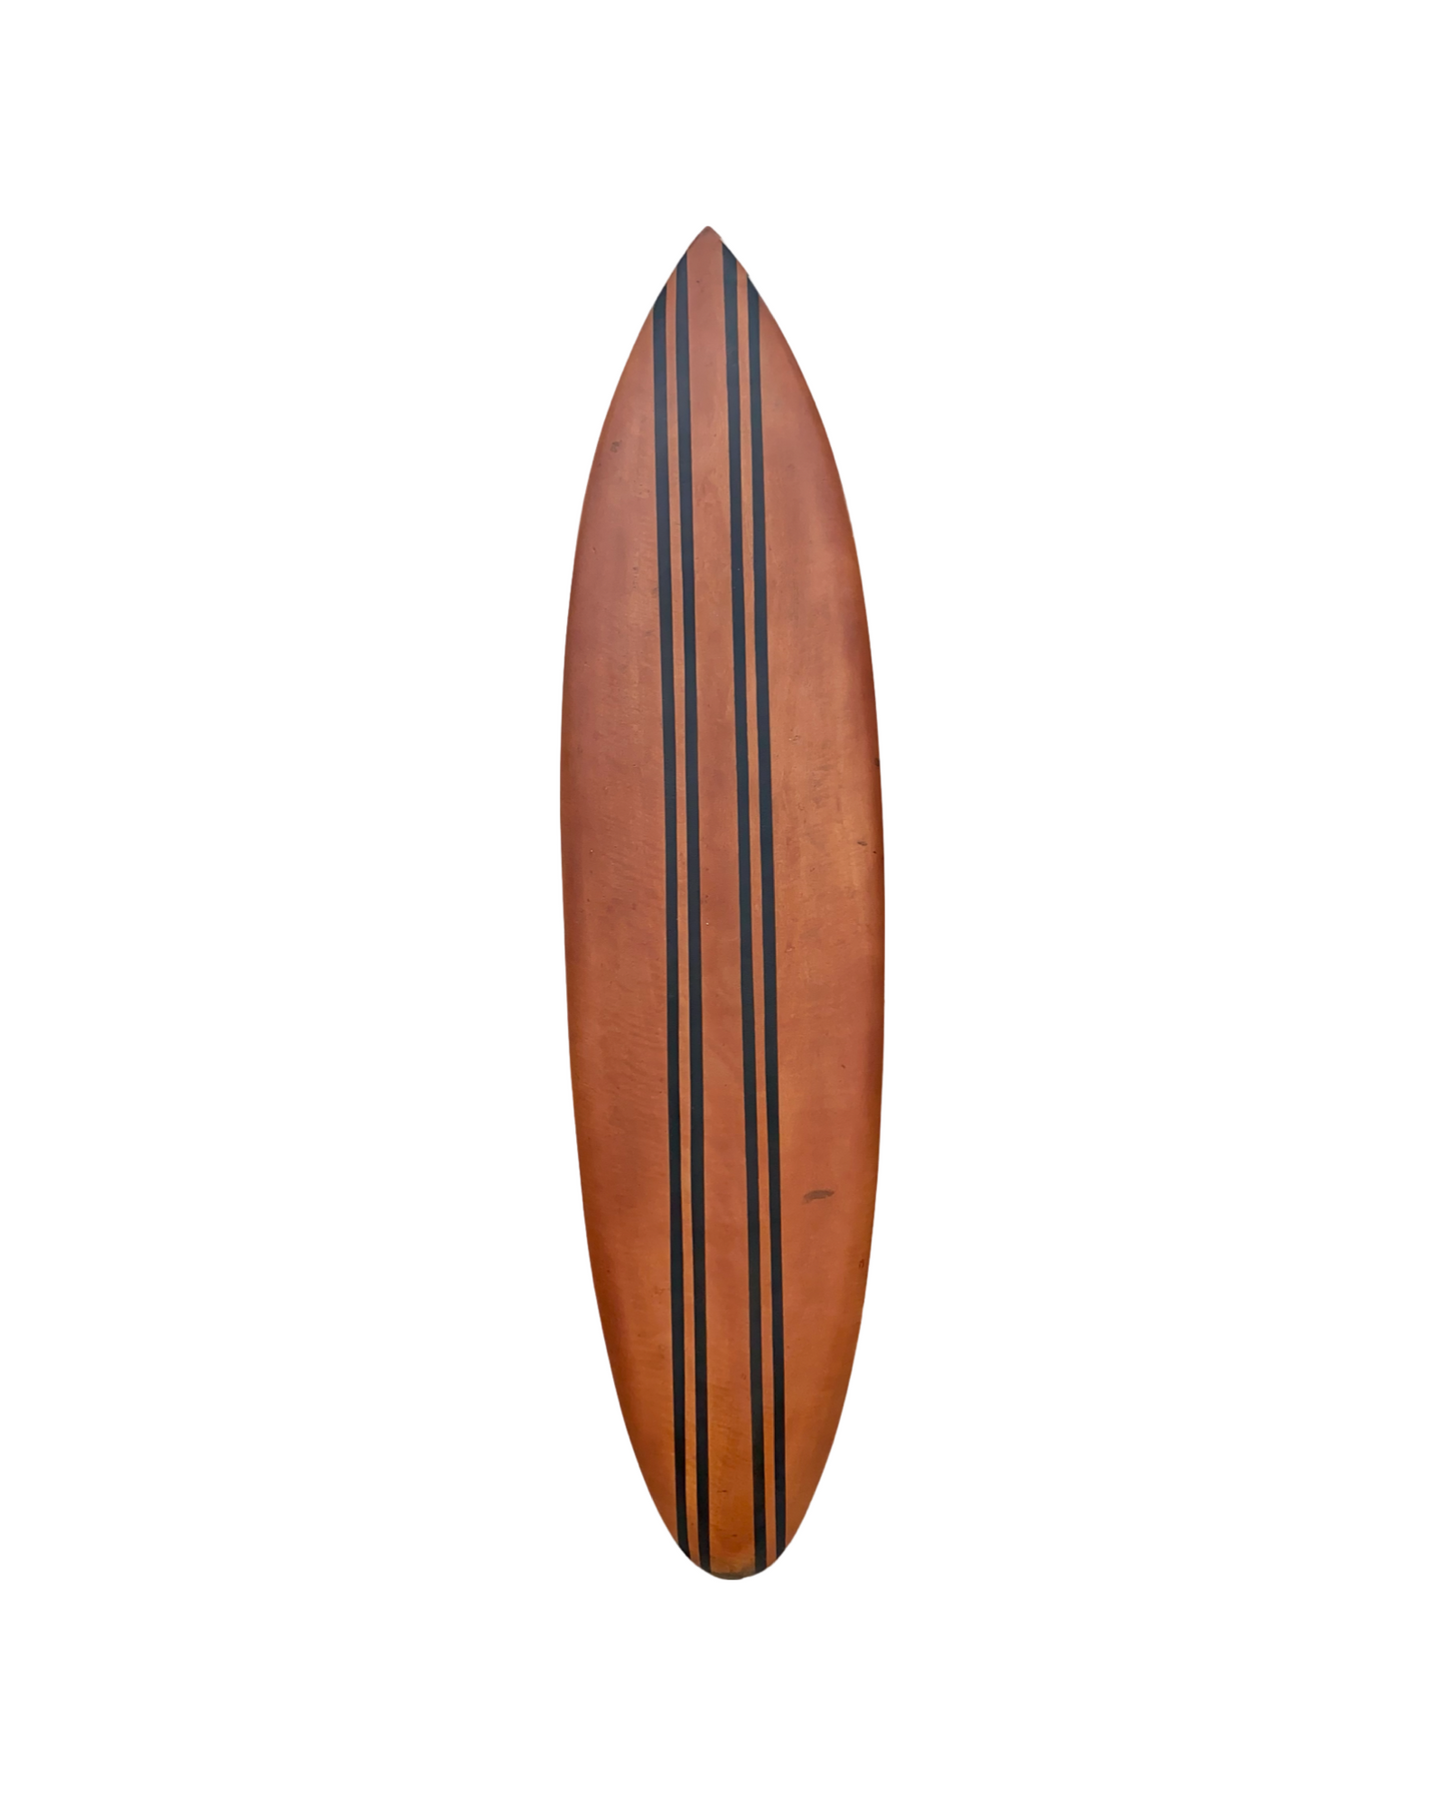 Large Mahogany Surfboard Wall Art